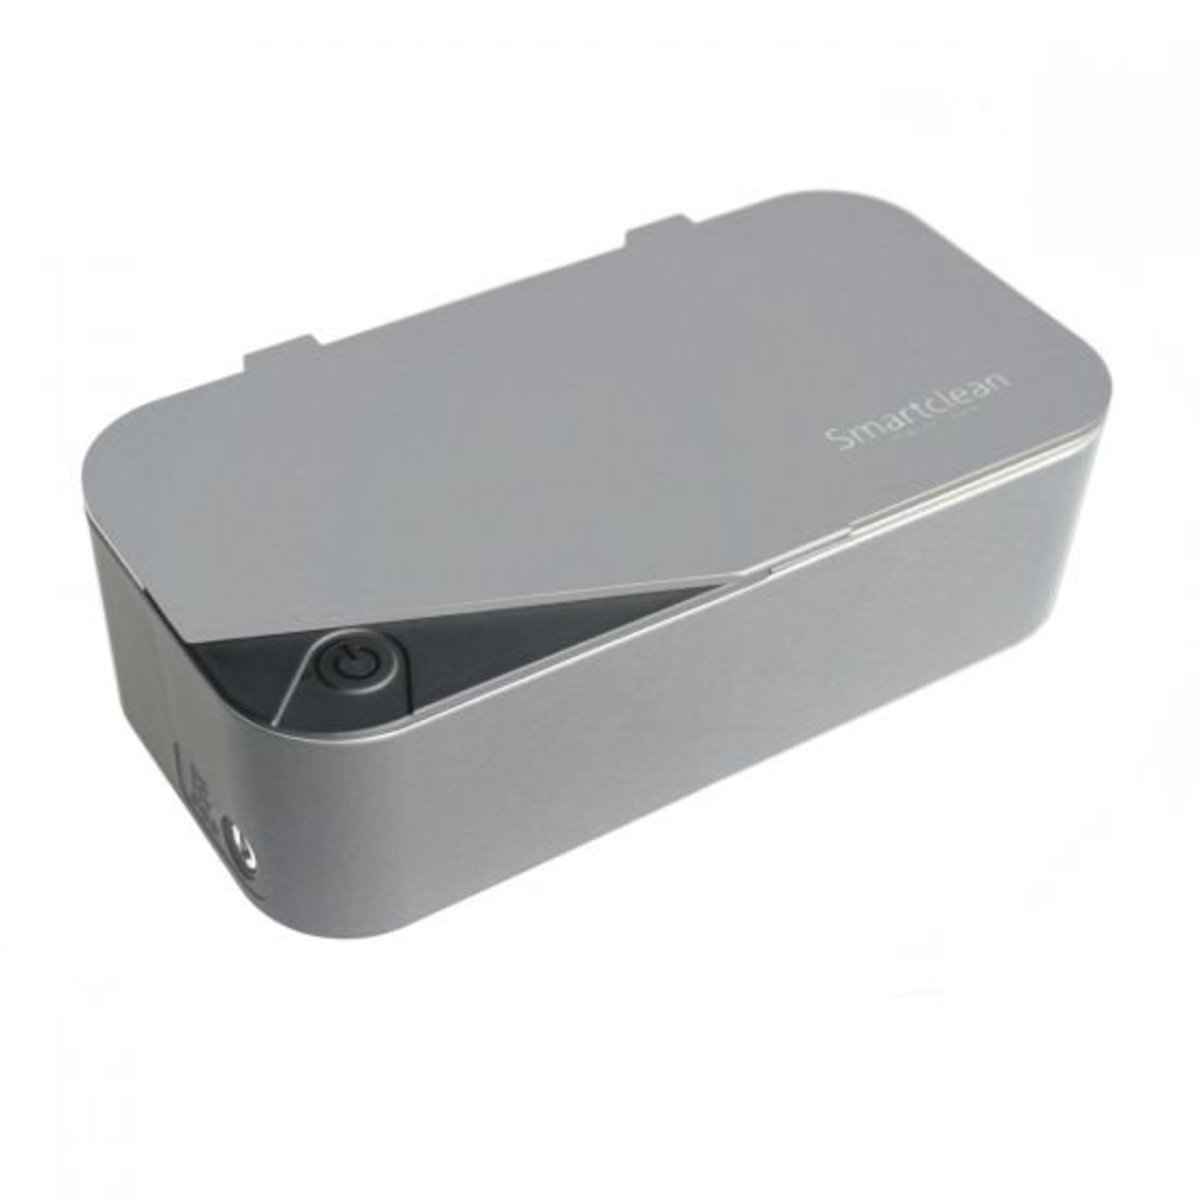 Smartclean - 超聲波眼鏡清洗機 Vision.7 升級版 - 銀色 【香港行貨】